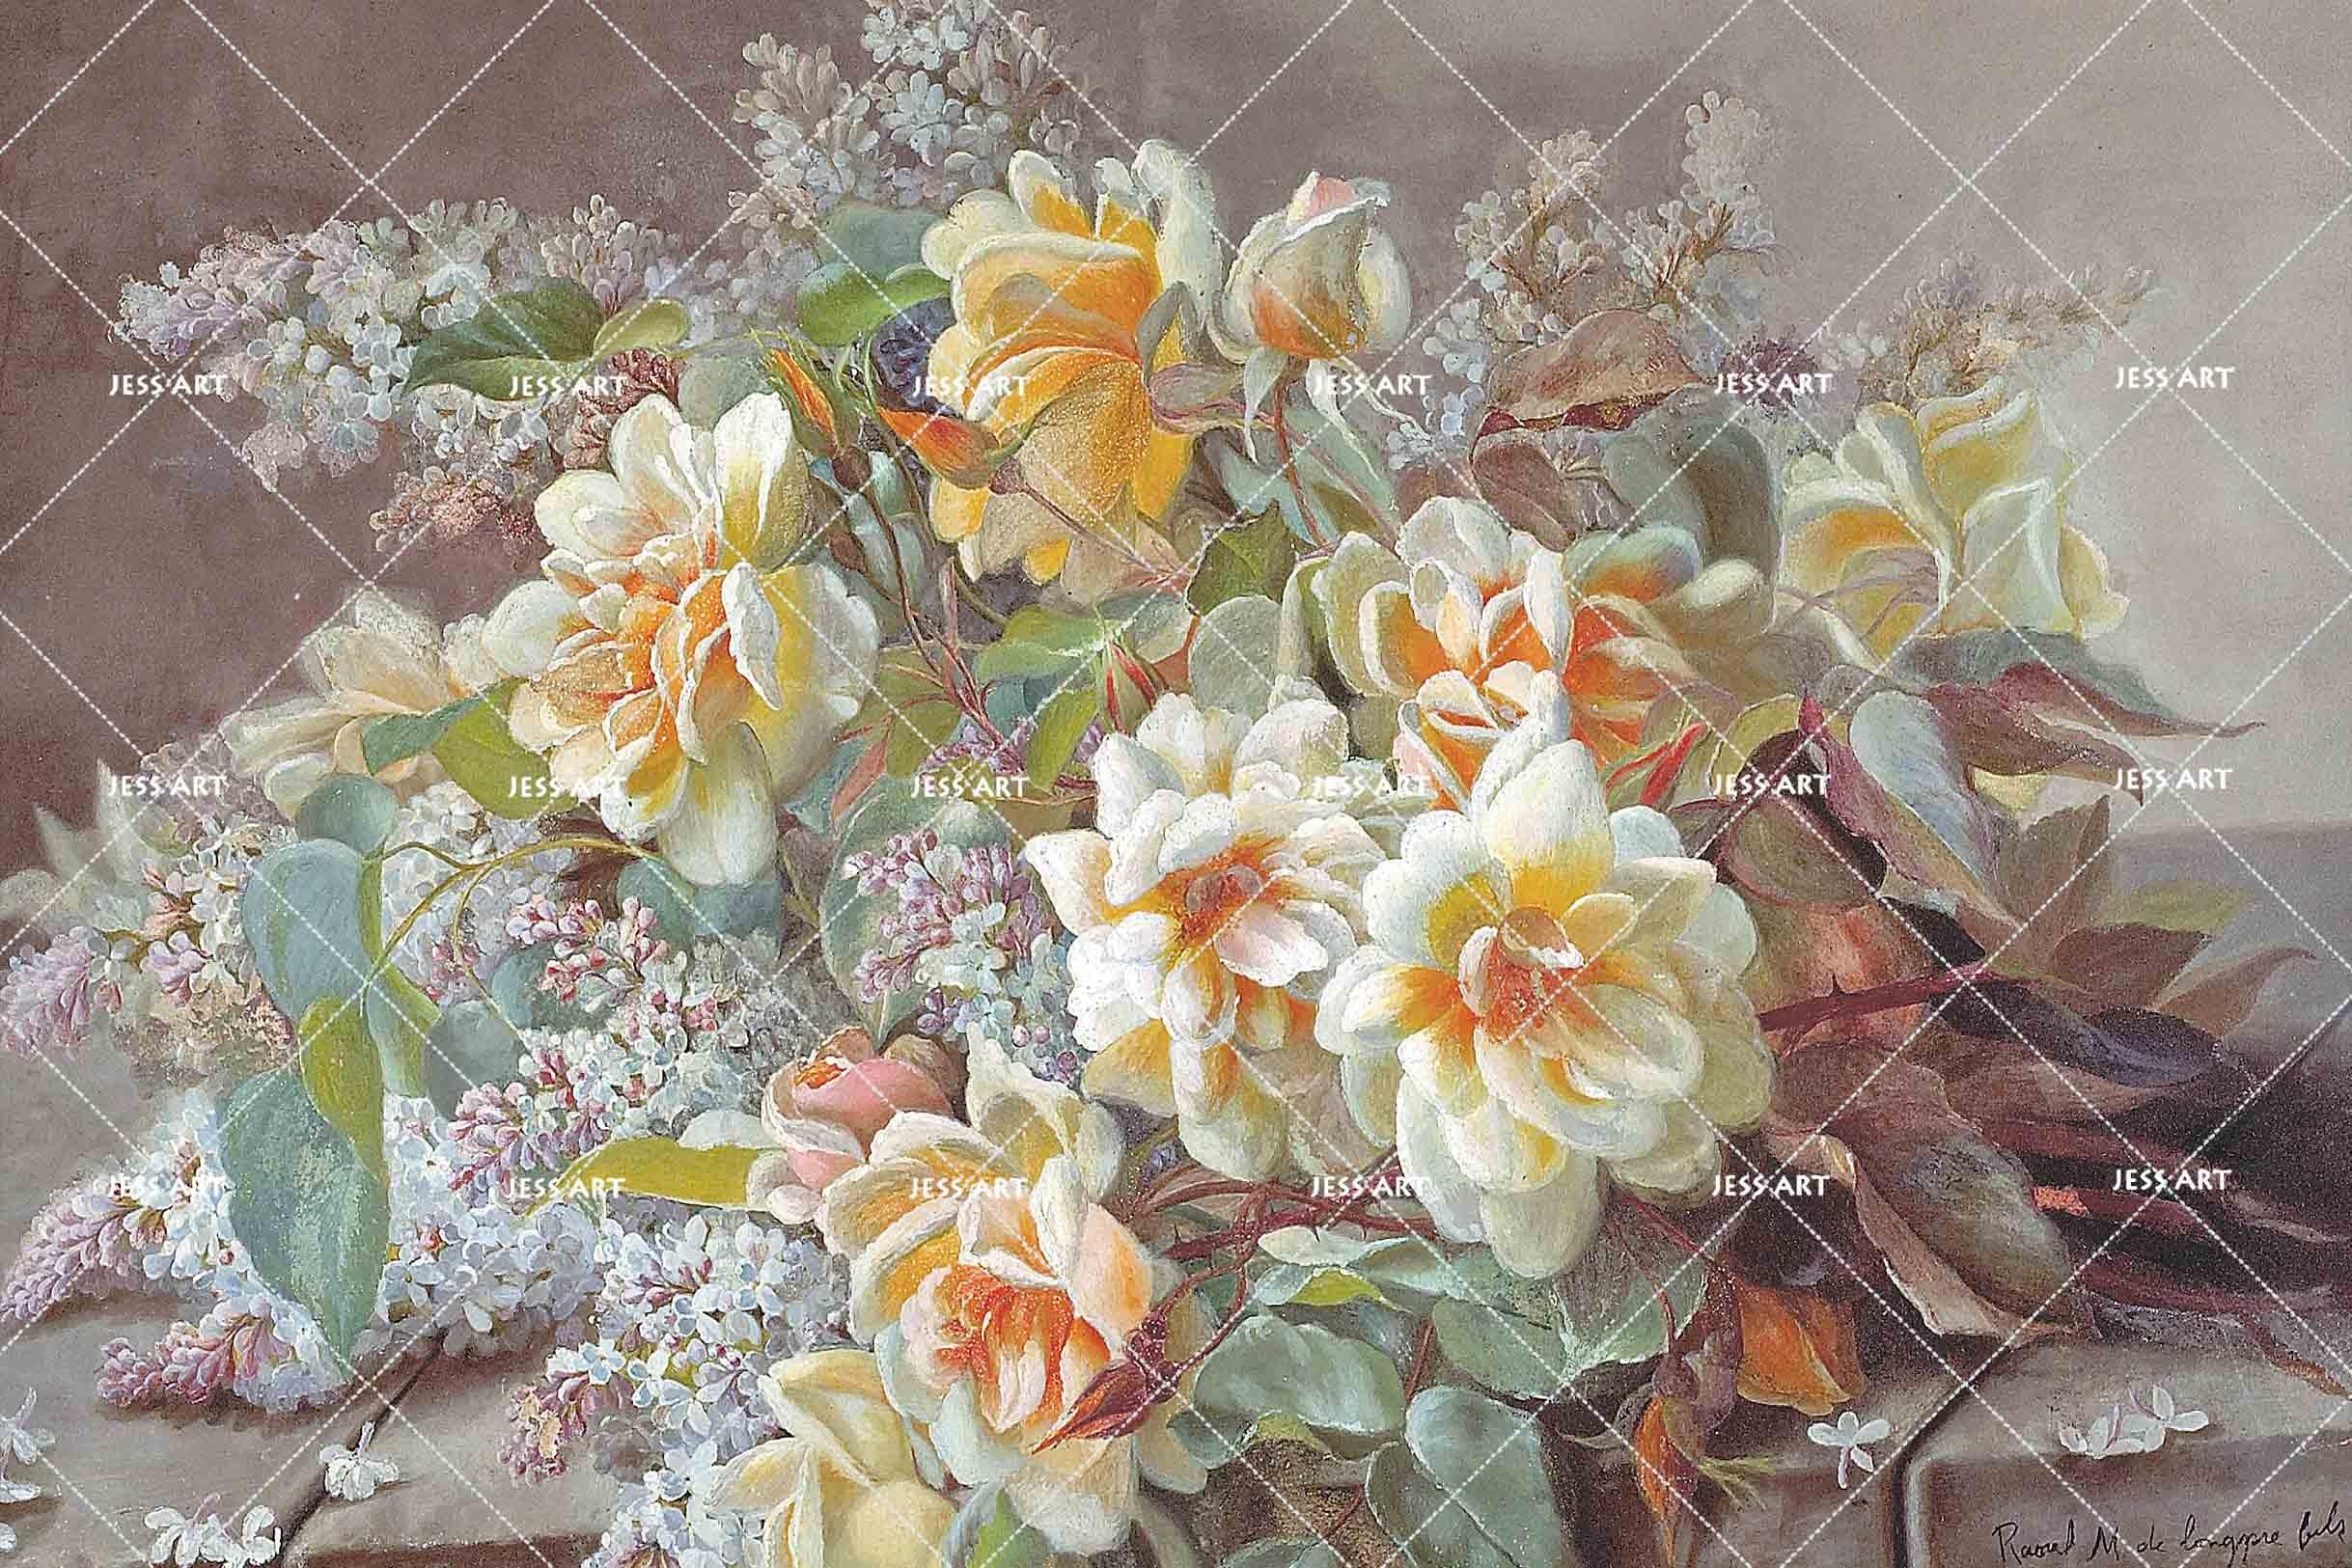 3D flower cabinet book oil painting wall mural wallpaper 07- Jess Art Decoration